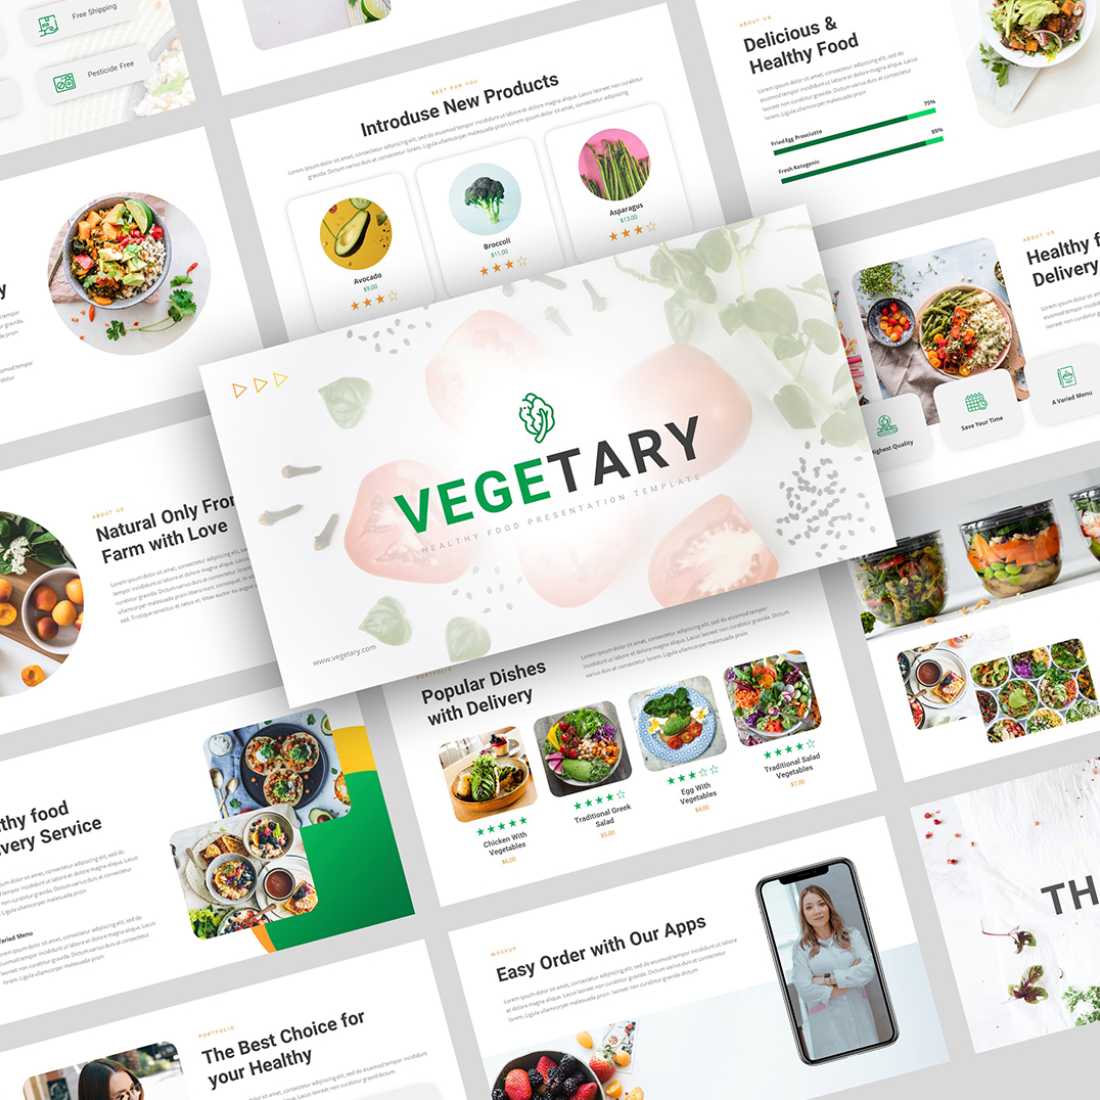 Vegetary - Healthy Food Presentation Google Slides Template preview image.